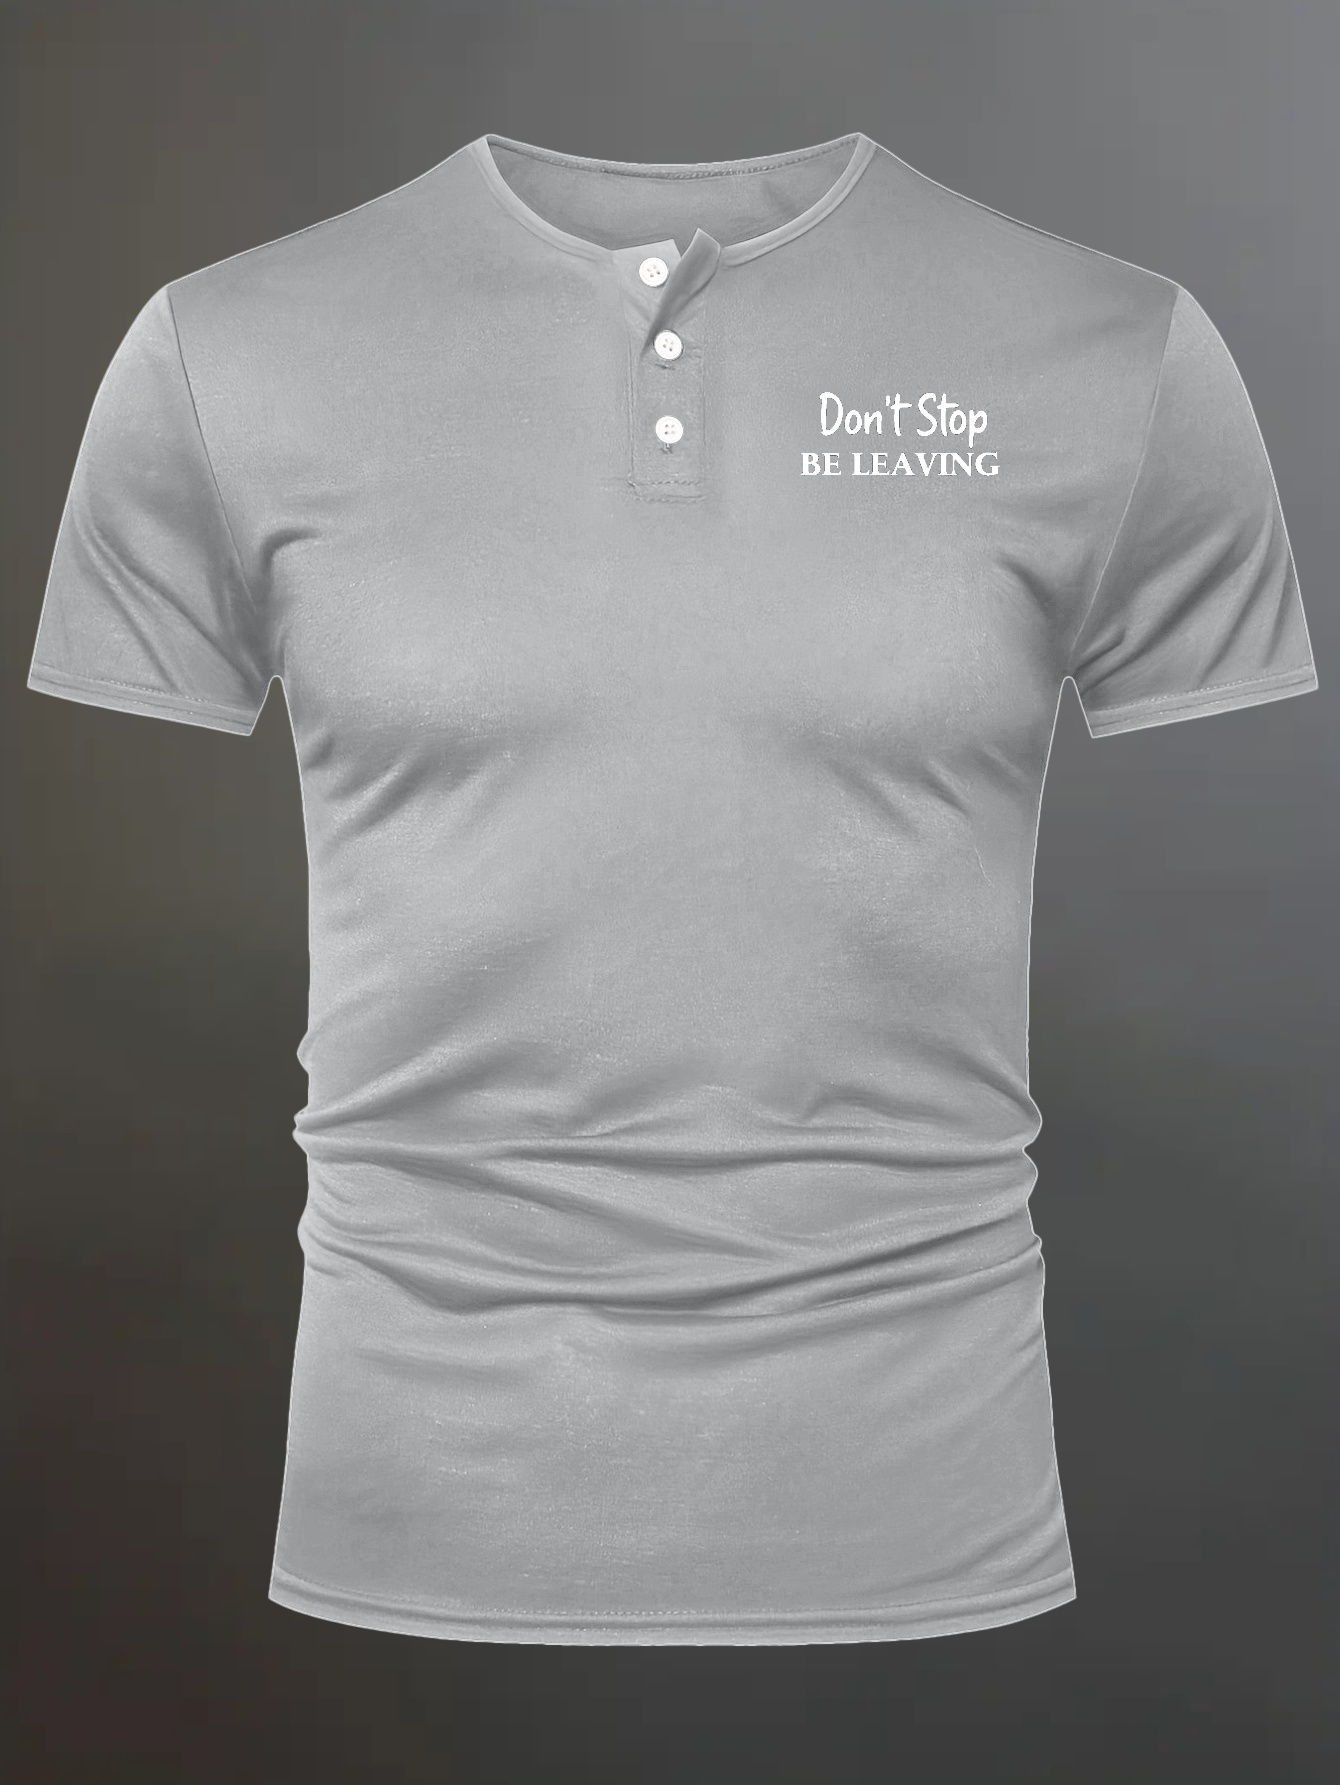 Camisa polo de manga corta para hombre, con botones, cuello Henley,  impresa, camiseta de verano, casual, deportes, golf, camisas